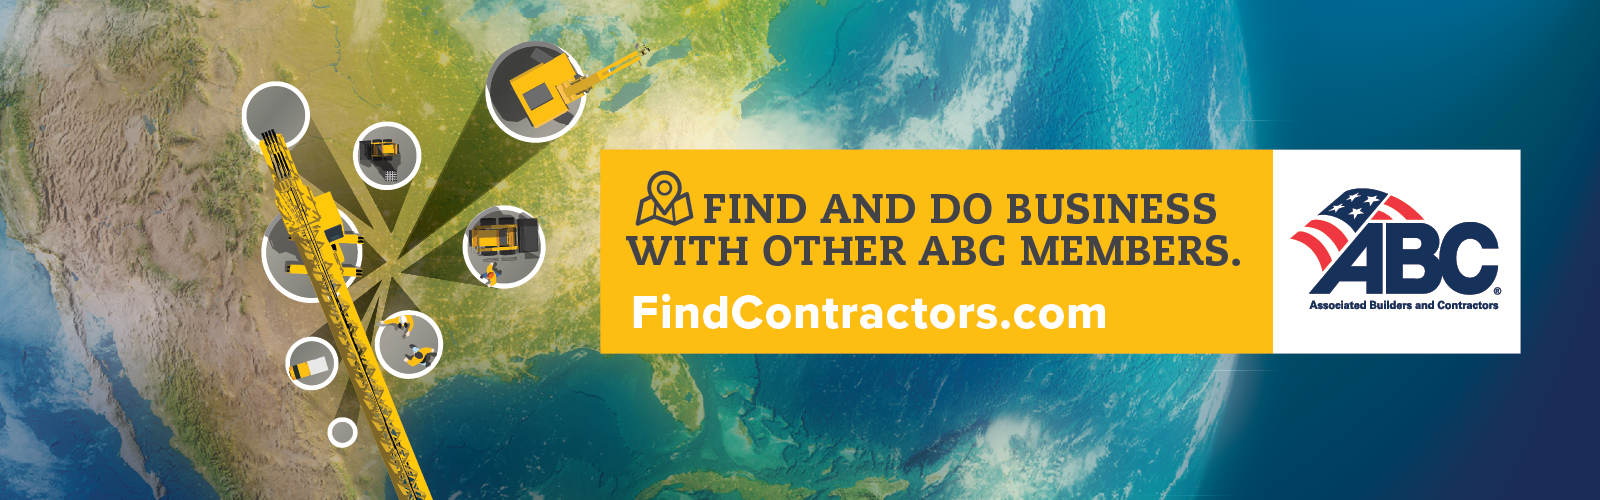 Find Contractors Banner (1600) new 2020 (1)